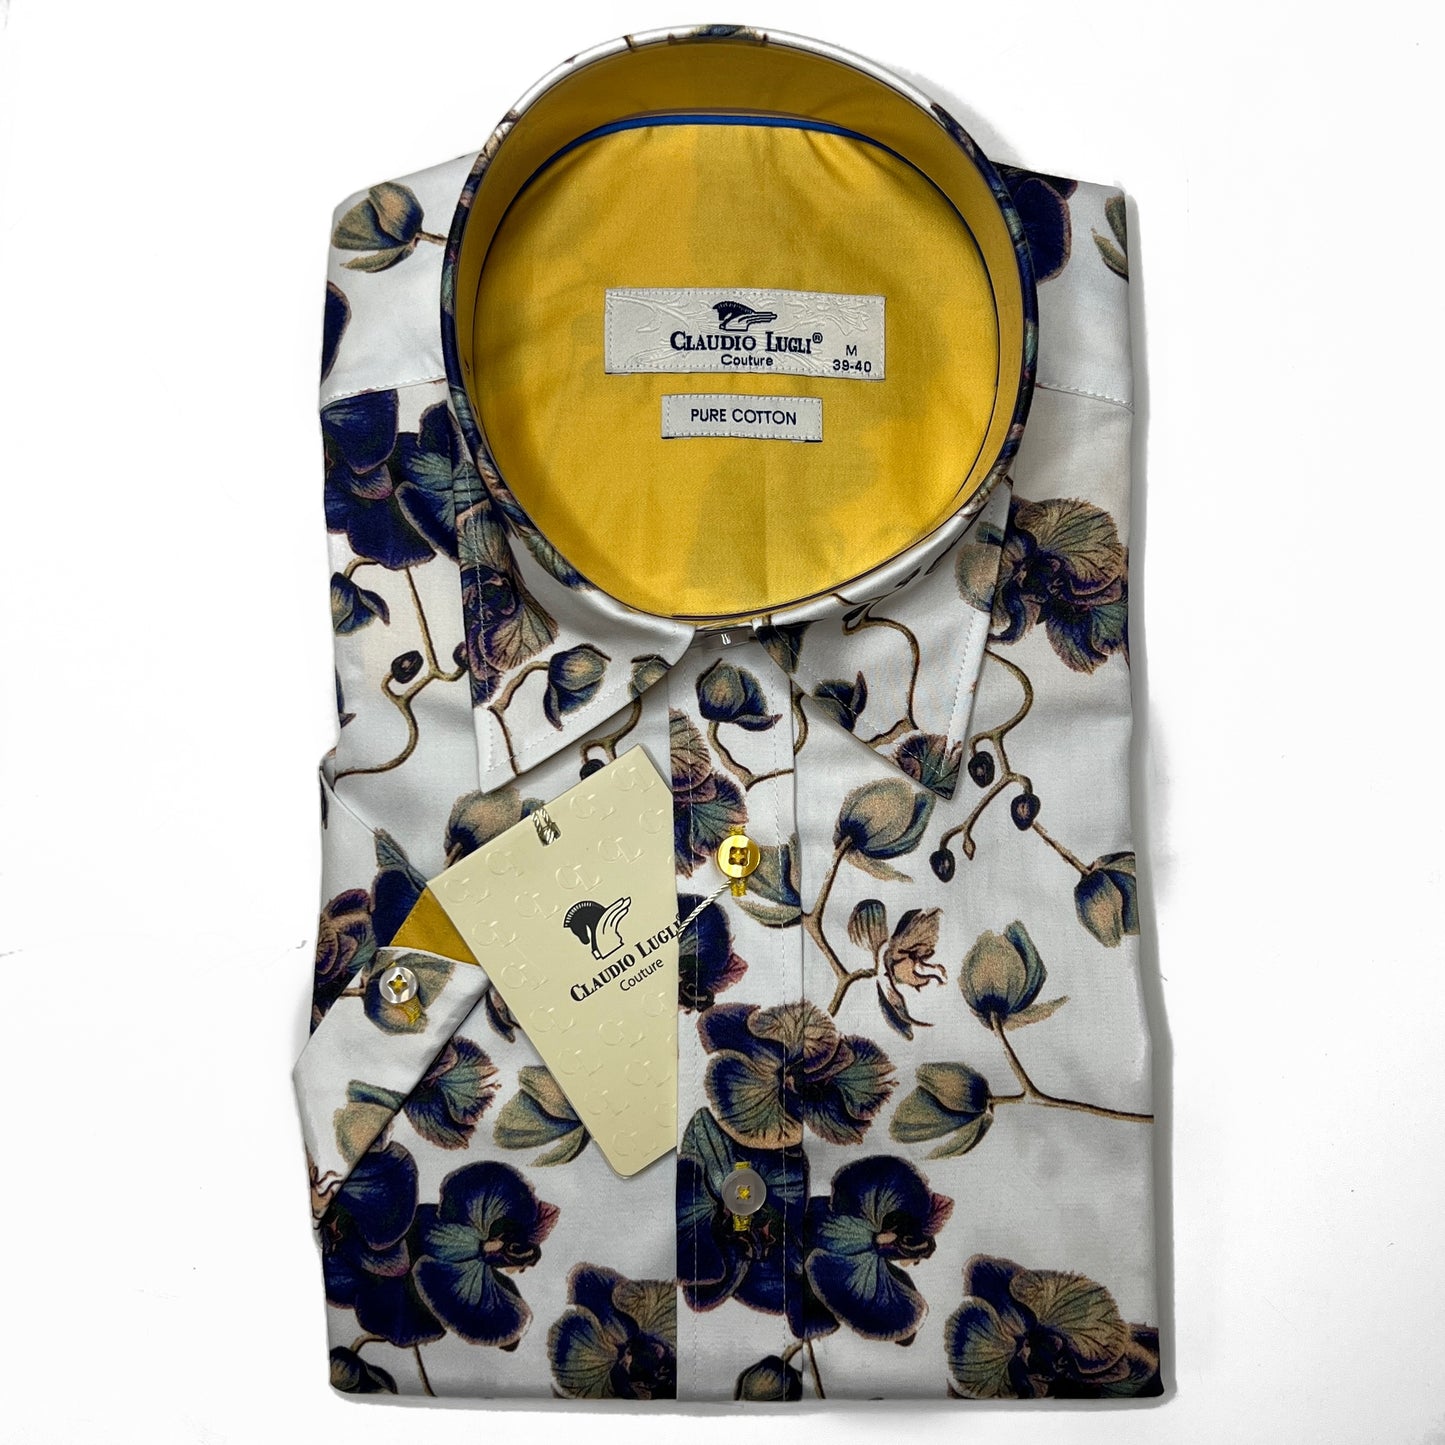 Claudio Lugli Men's Short Sleeve Orchid Print Shirt